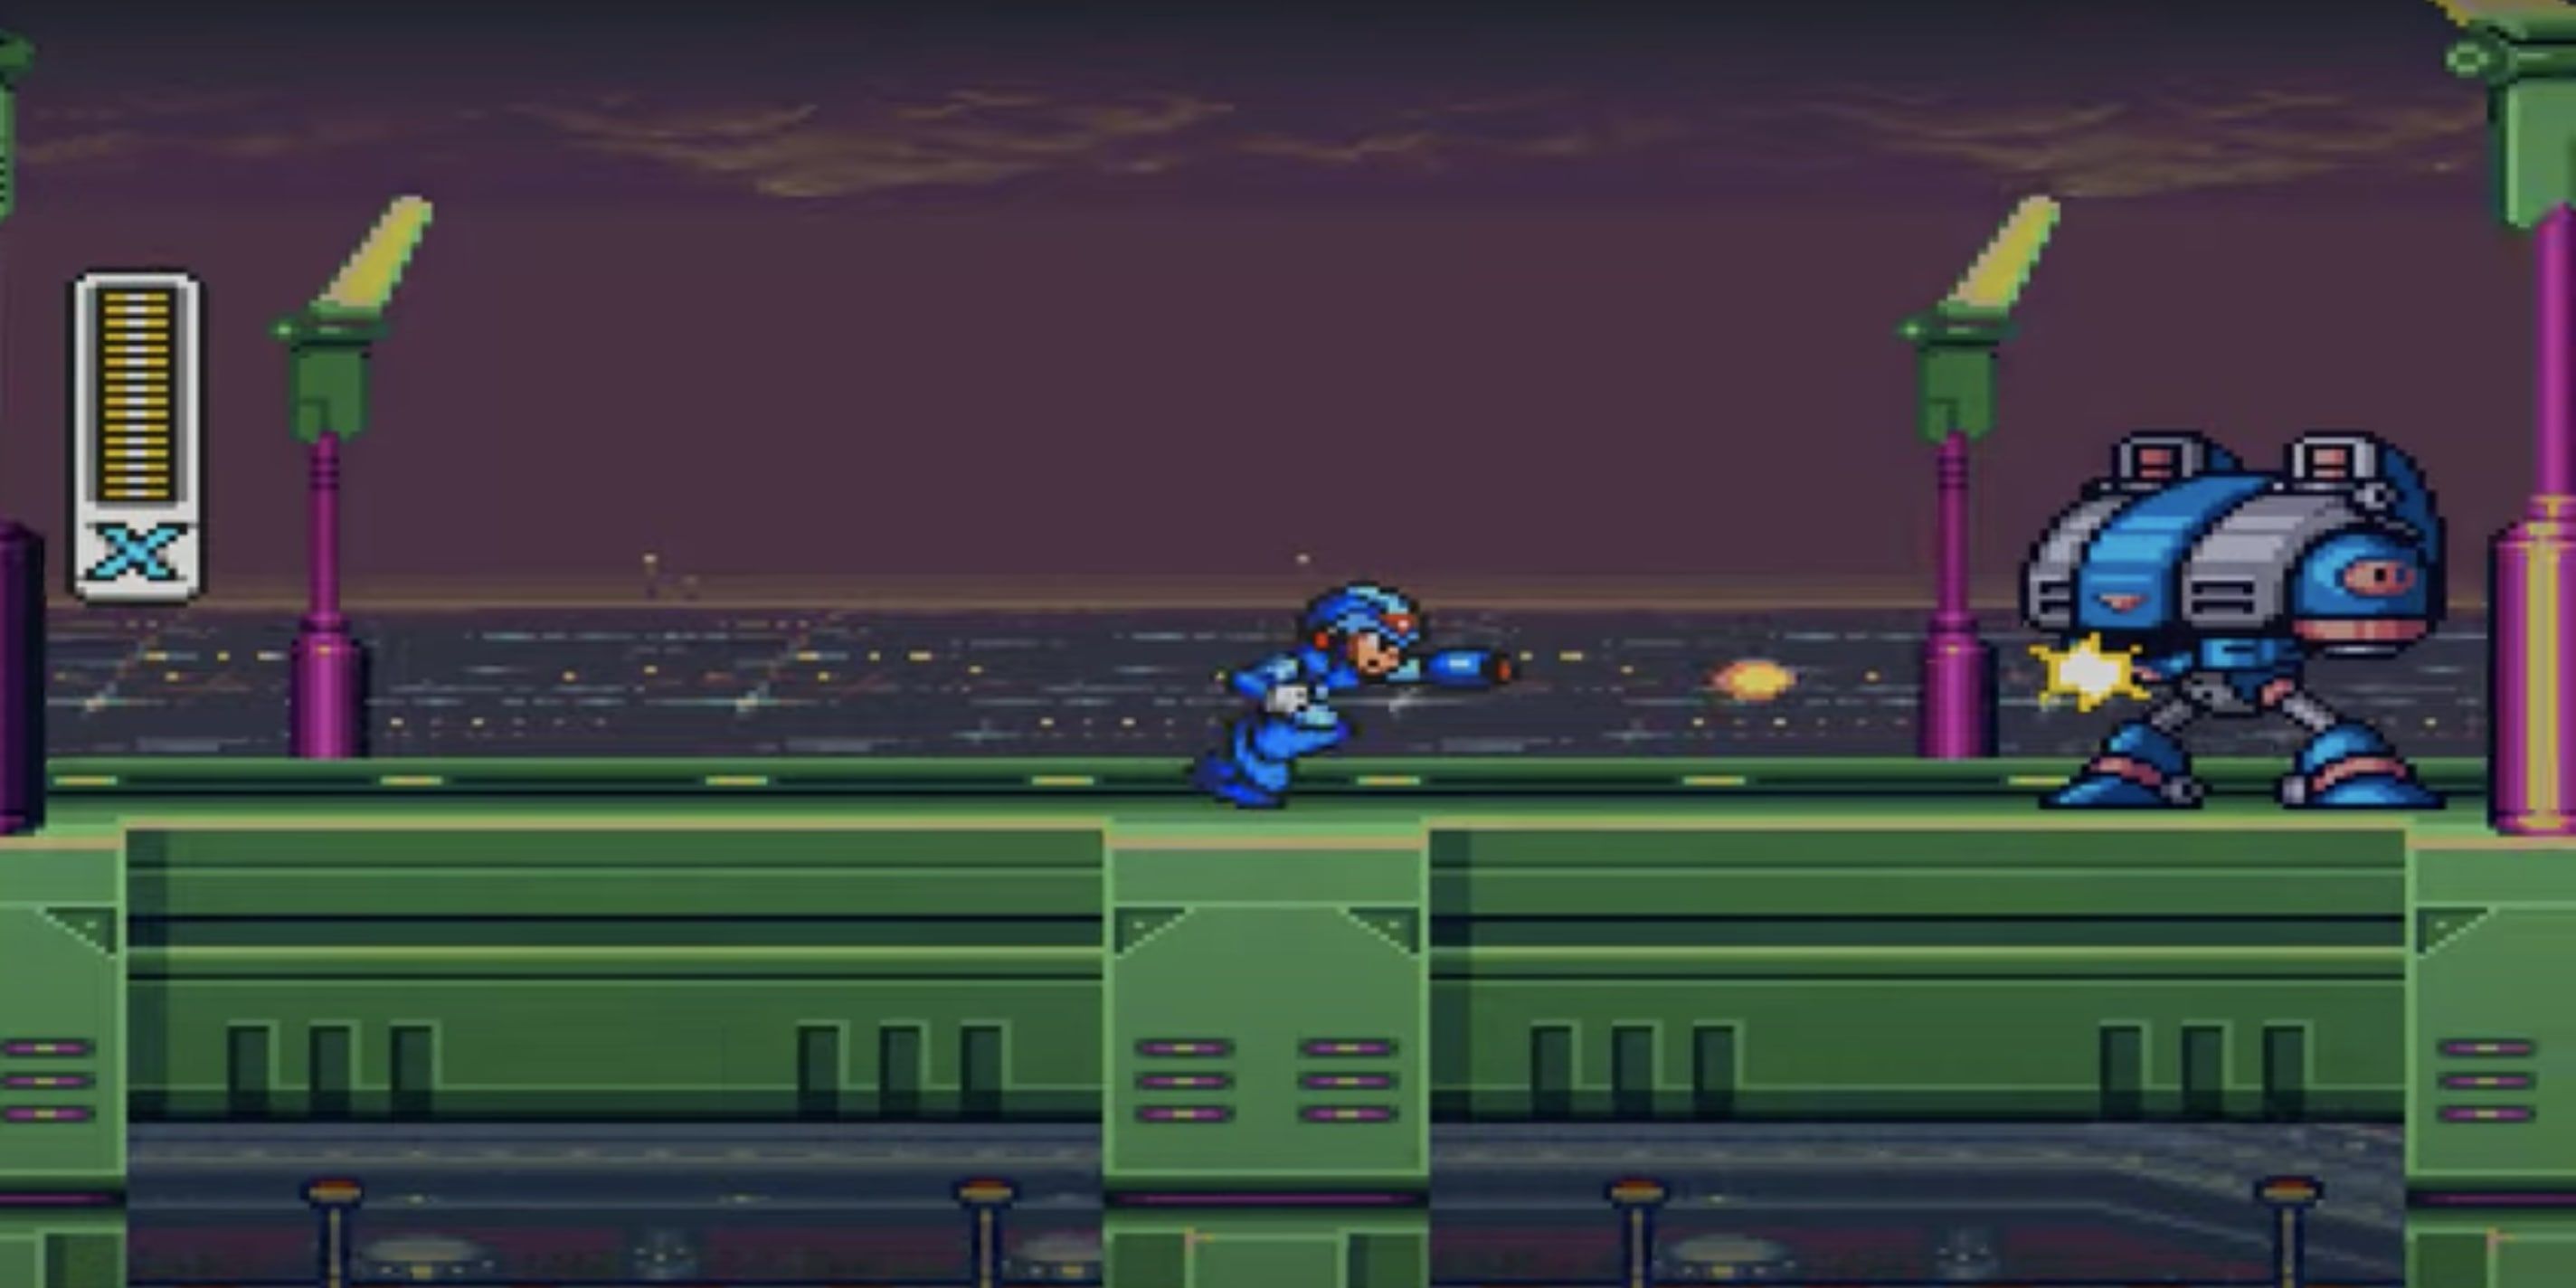 Mega Man combat still from the first Mega Man game